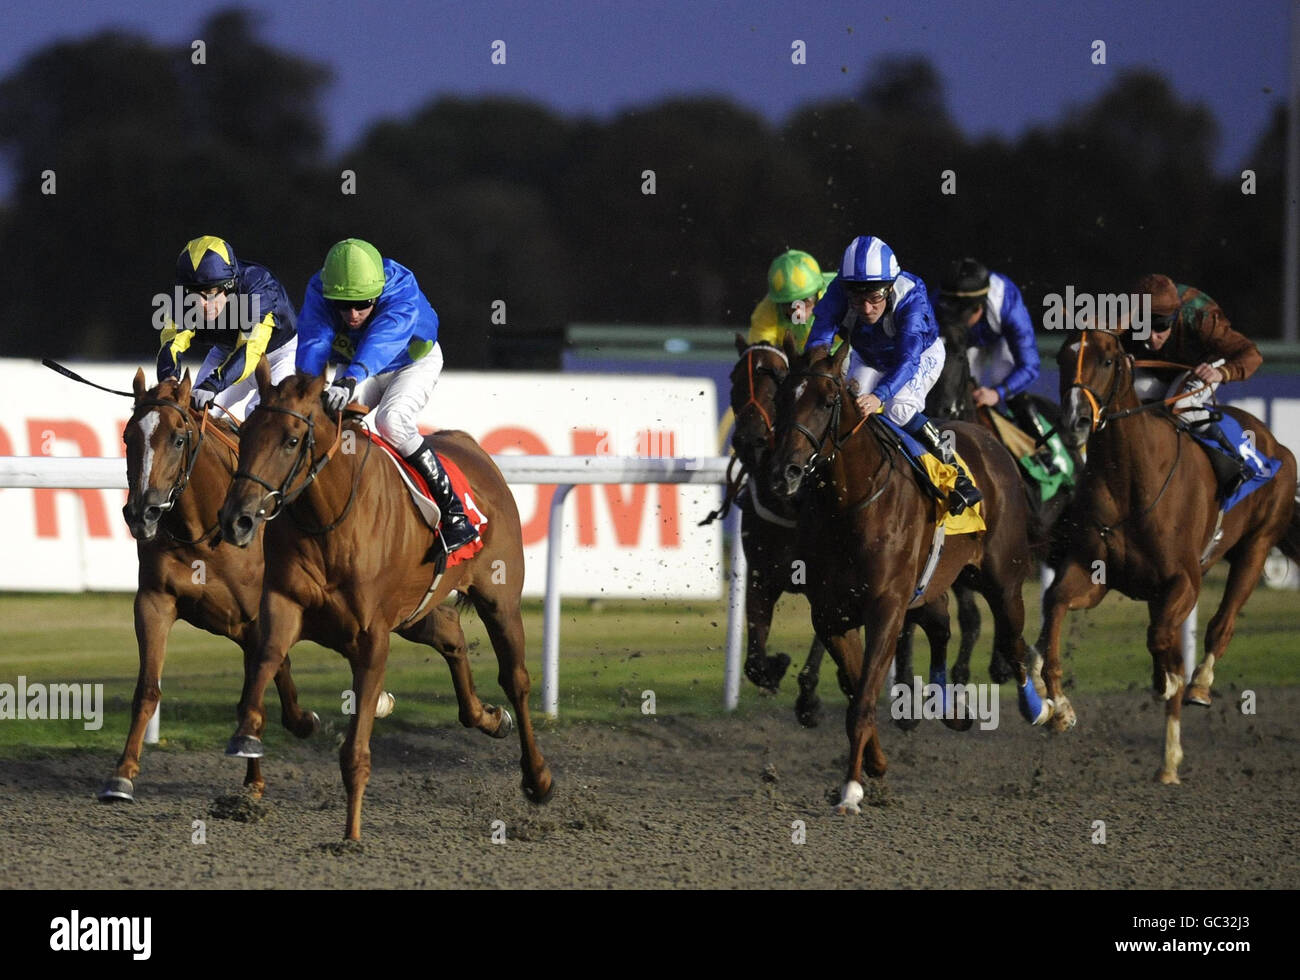 Horse Racing - Kempton Park Racecourse Stock Photo